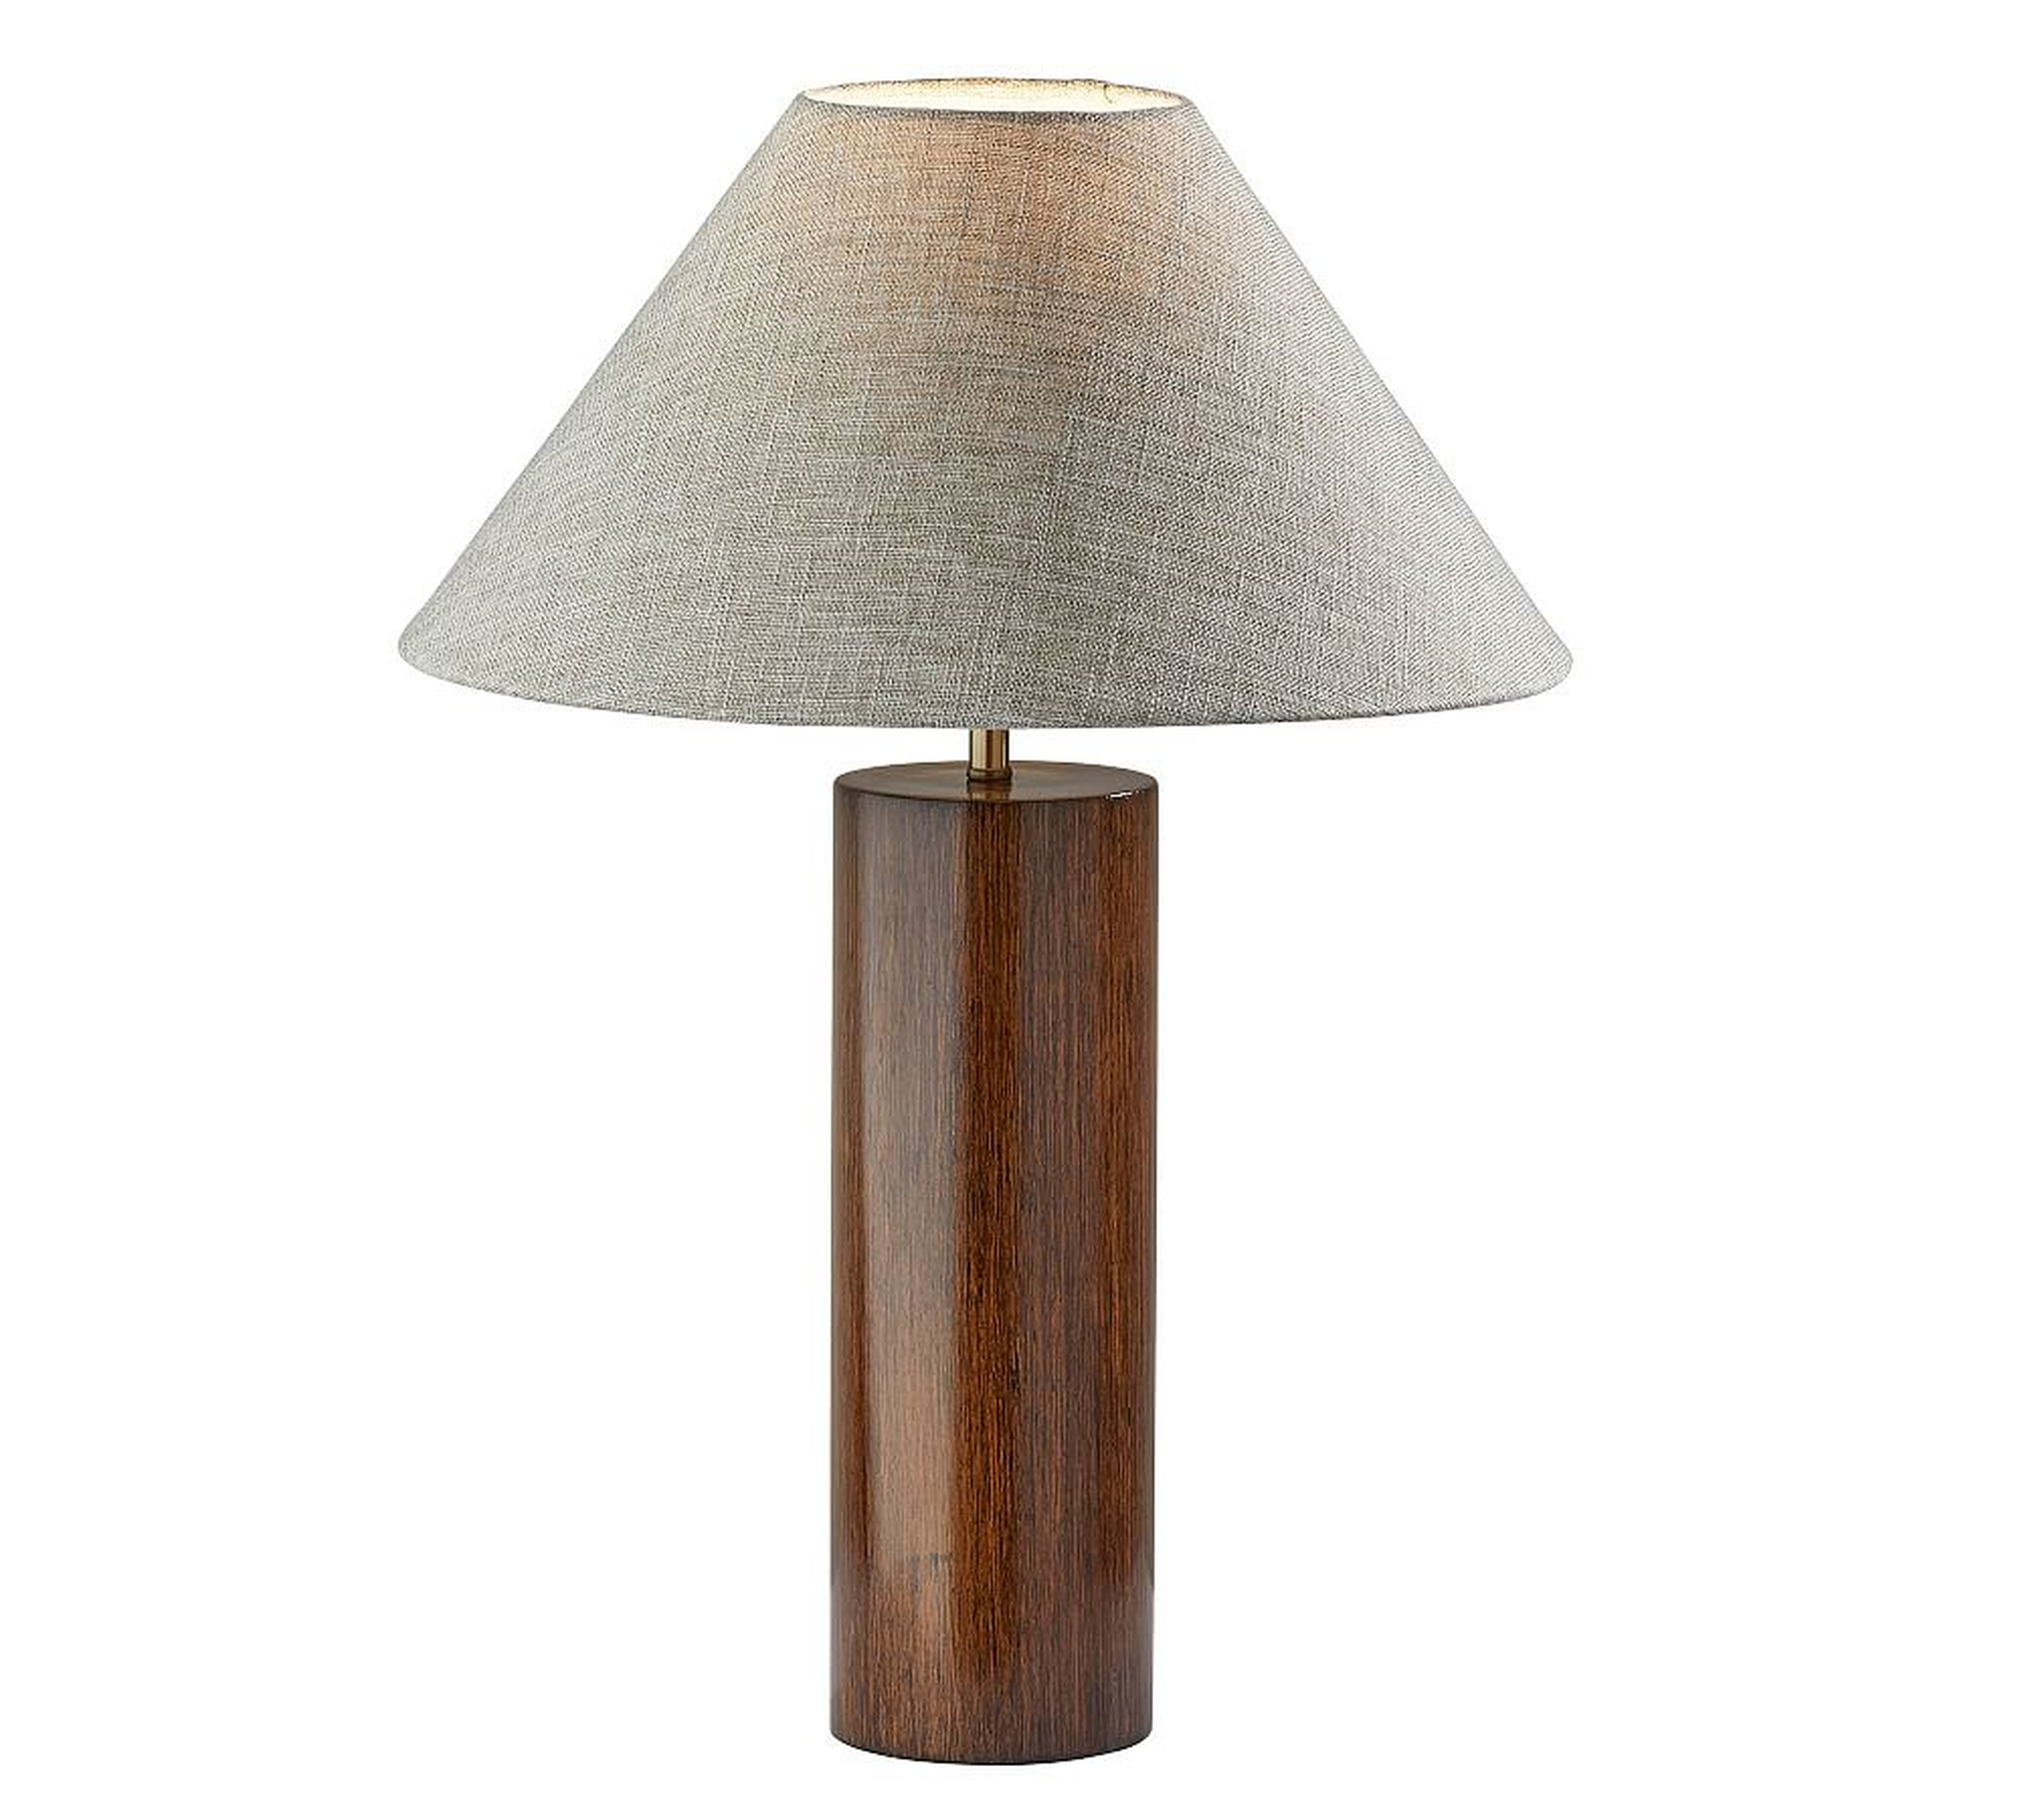 Steve Wood Table Lamp, Walnut - Pottery Barn